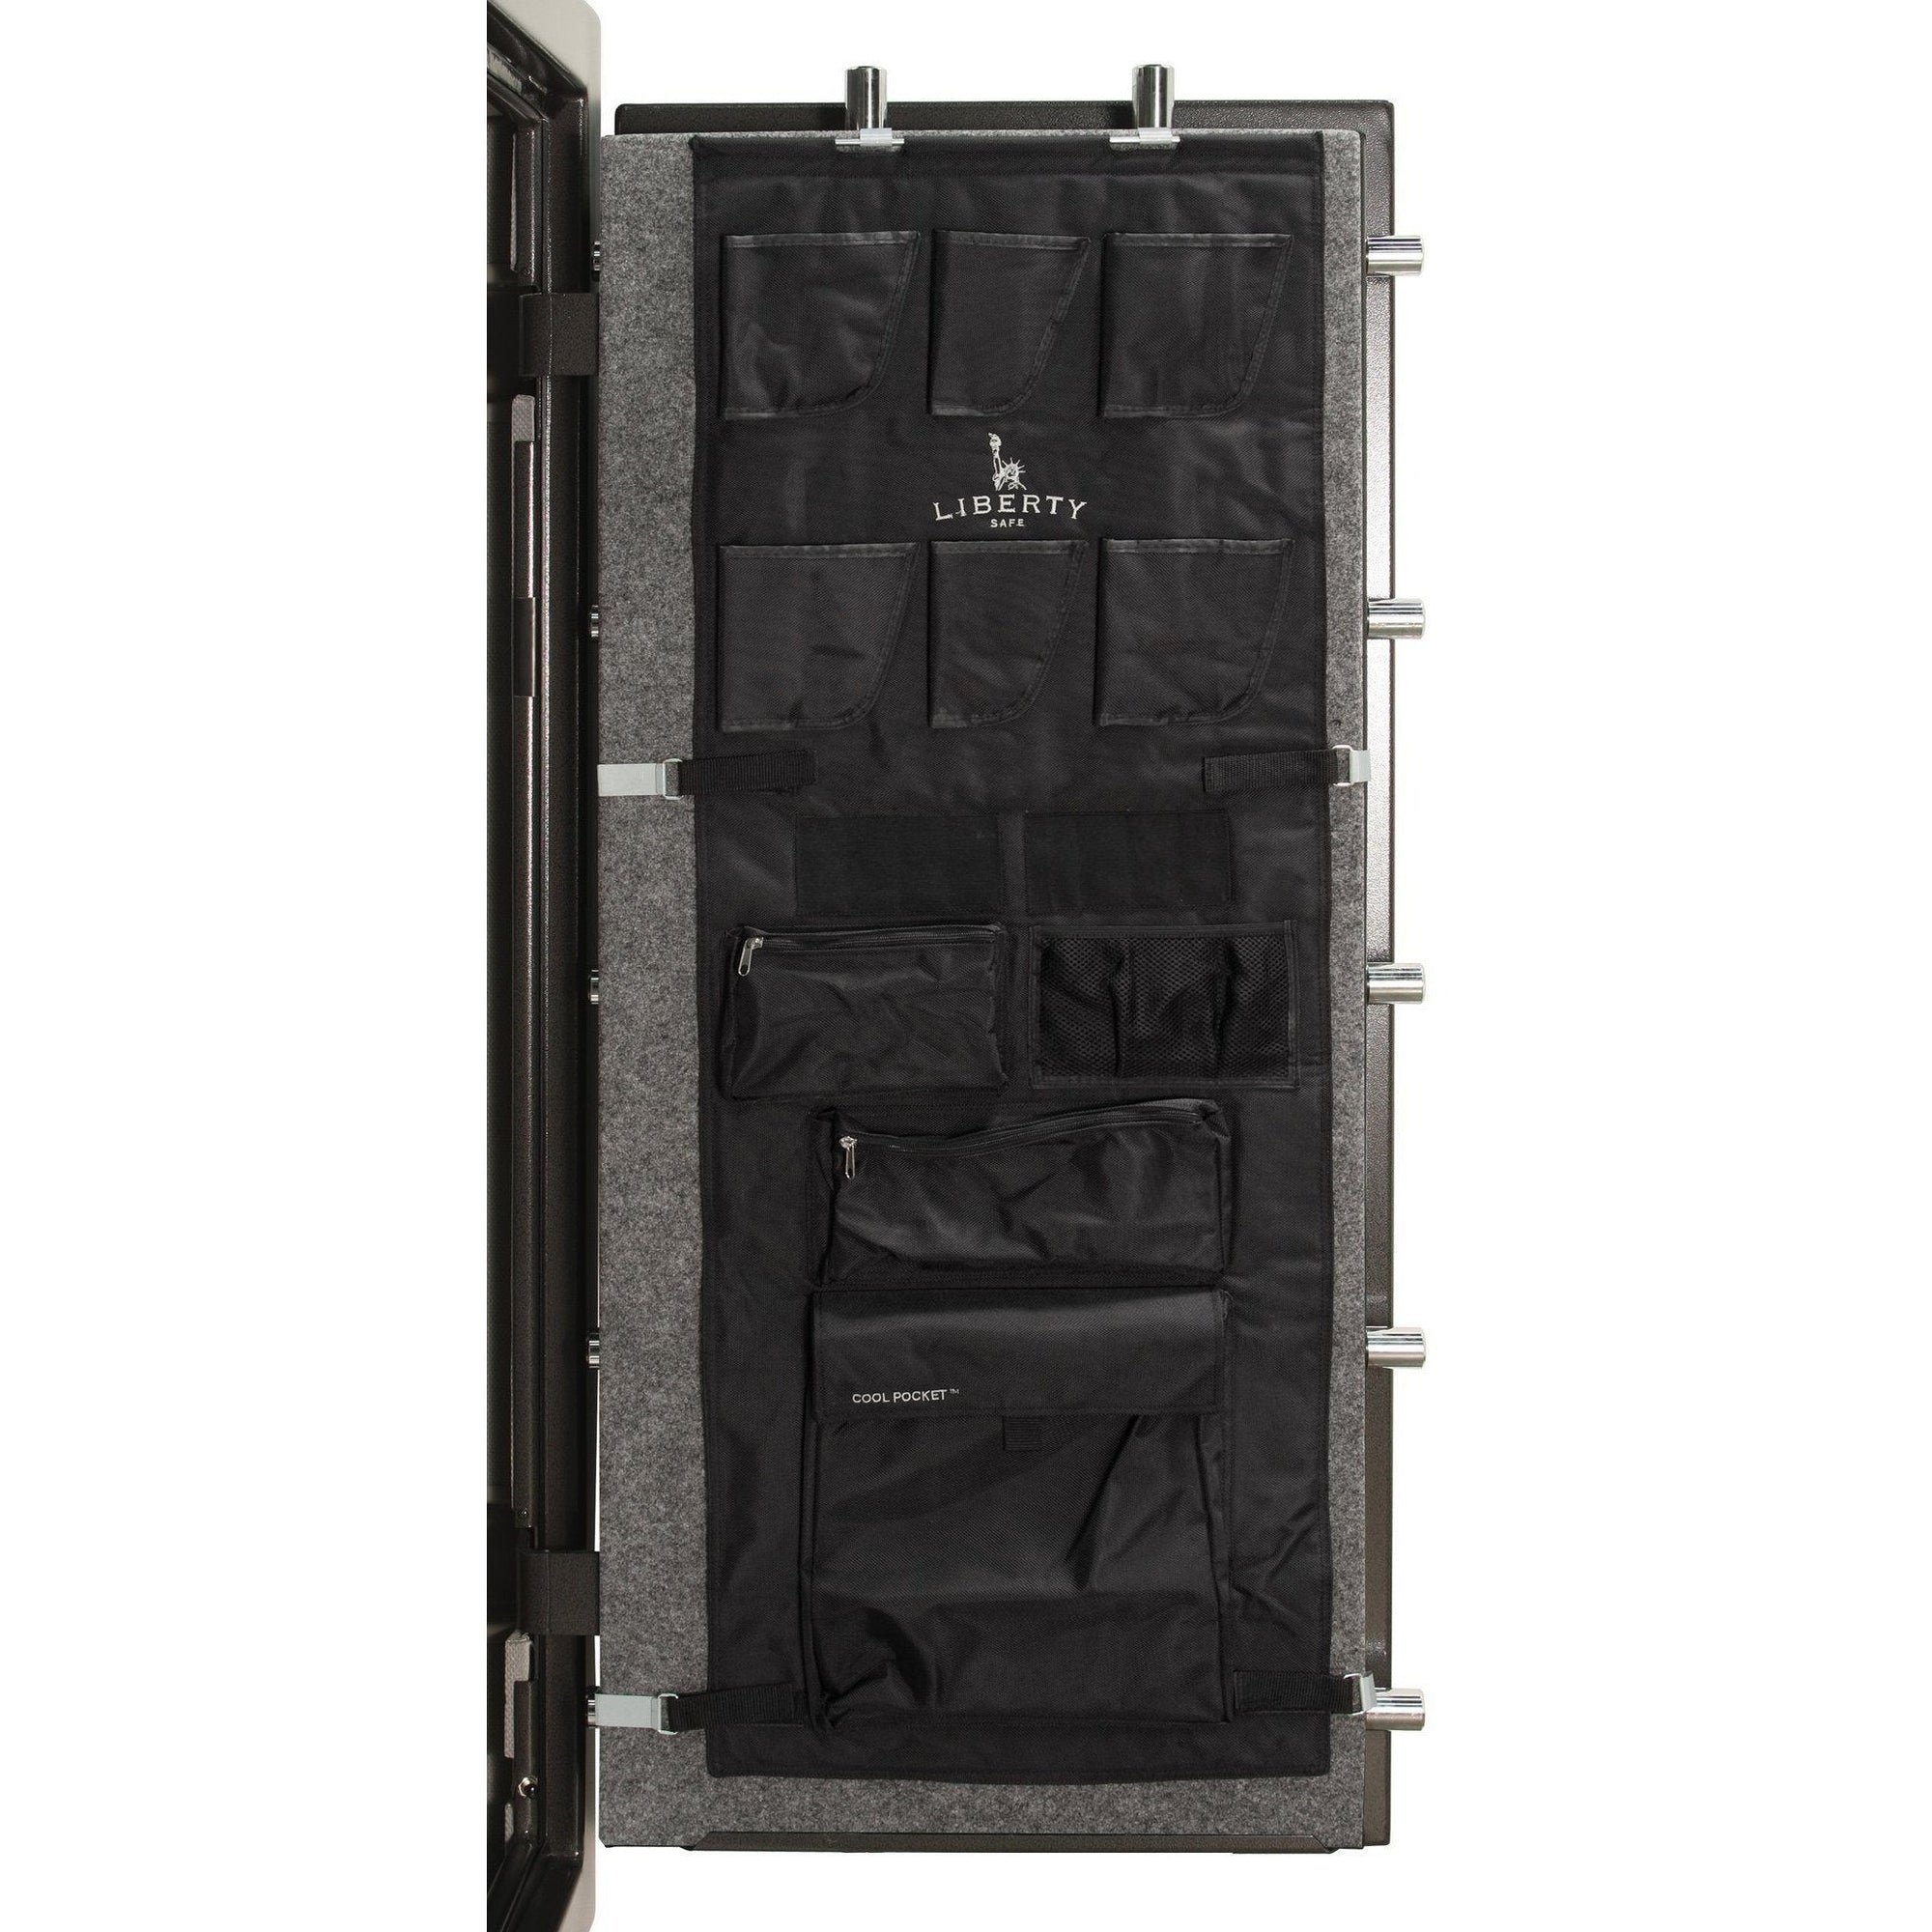 Accessory - storage - door panel - 20-23-25 size safes - MODLOCK